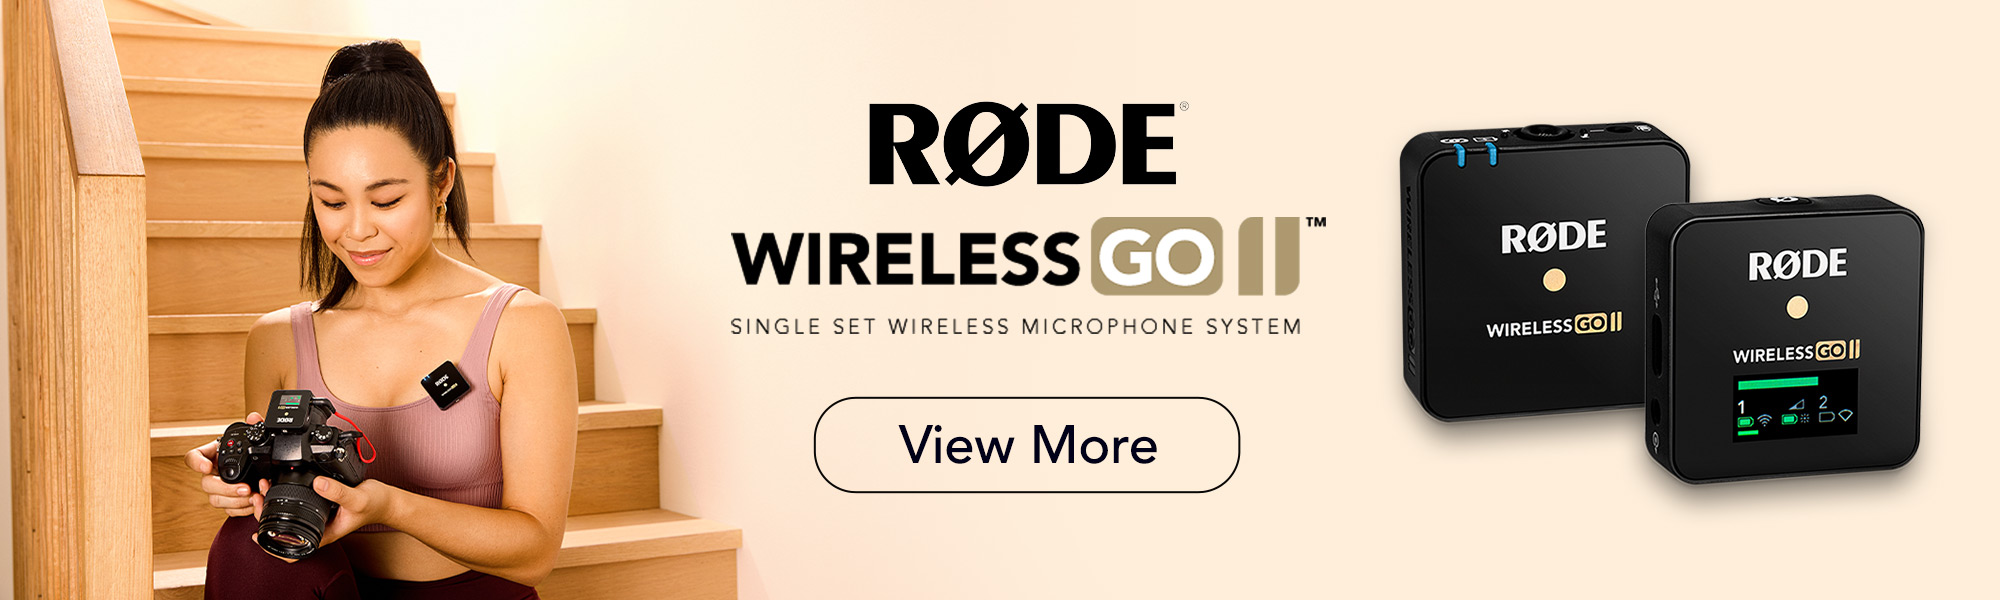 Photoshack Rode Wireless GO II Single - Desktop